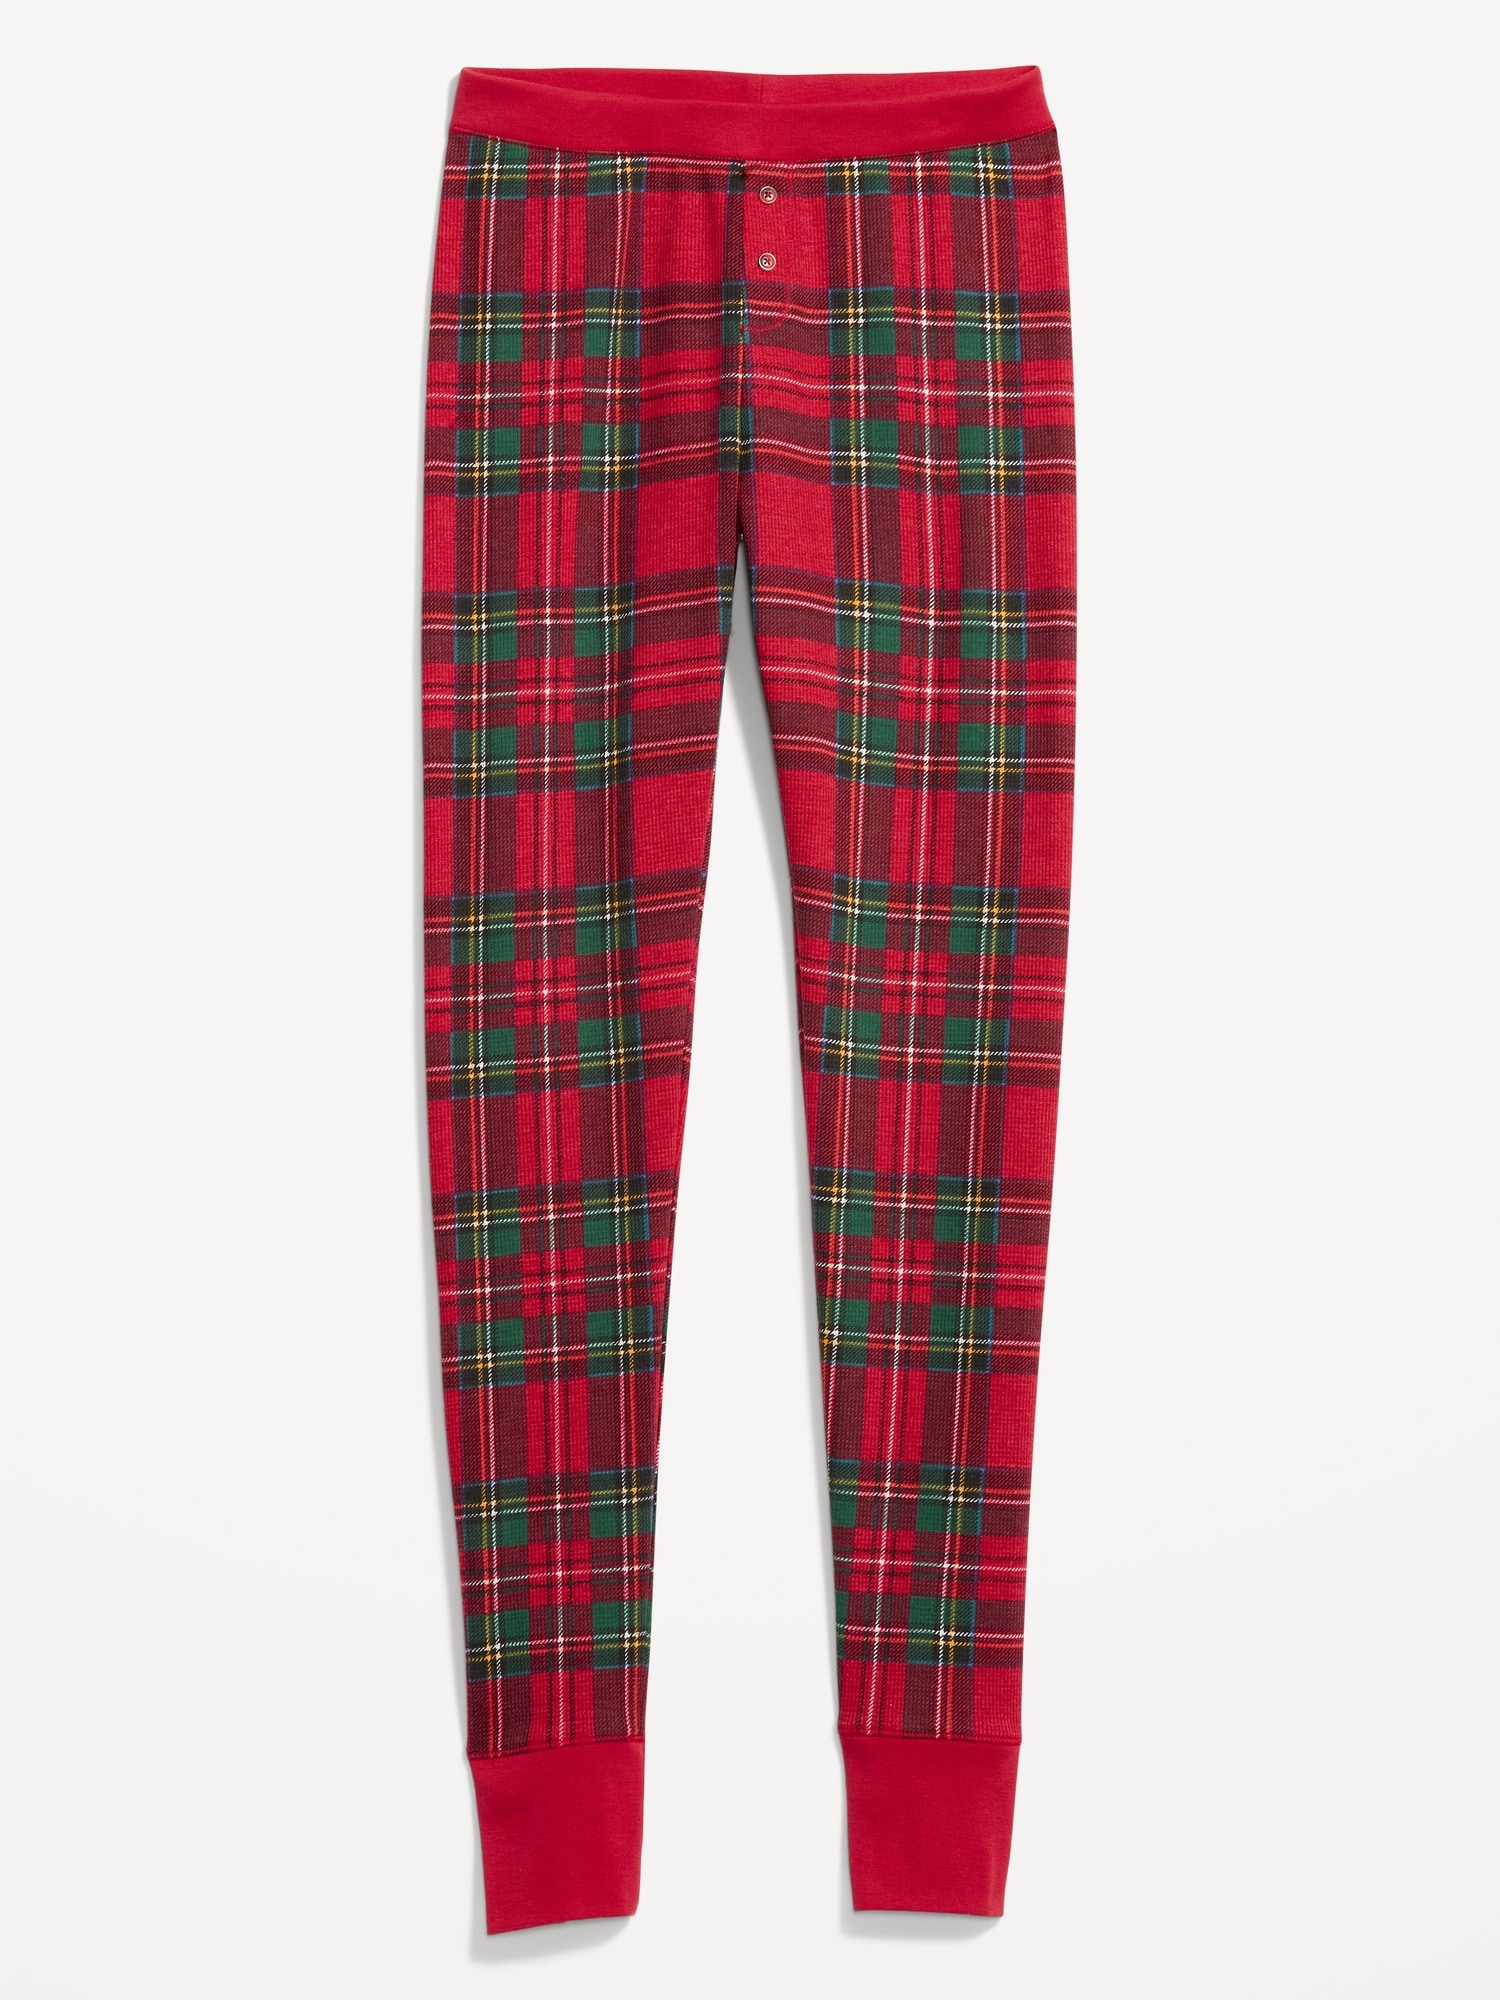 Womens BLACK Drawstring Lounge Pajama Pant Leggings Waffle Knit Large 12/14  Soft